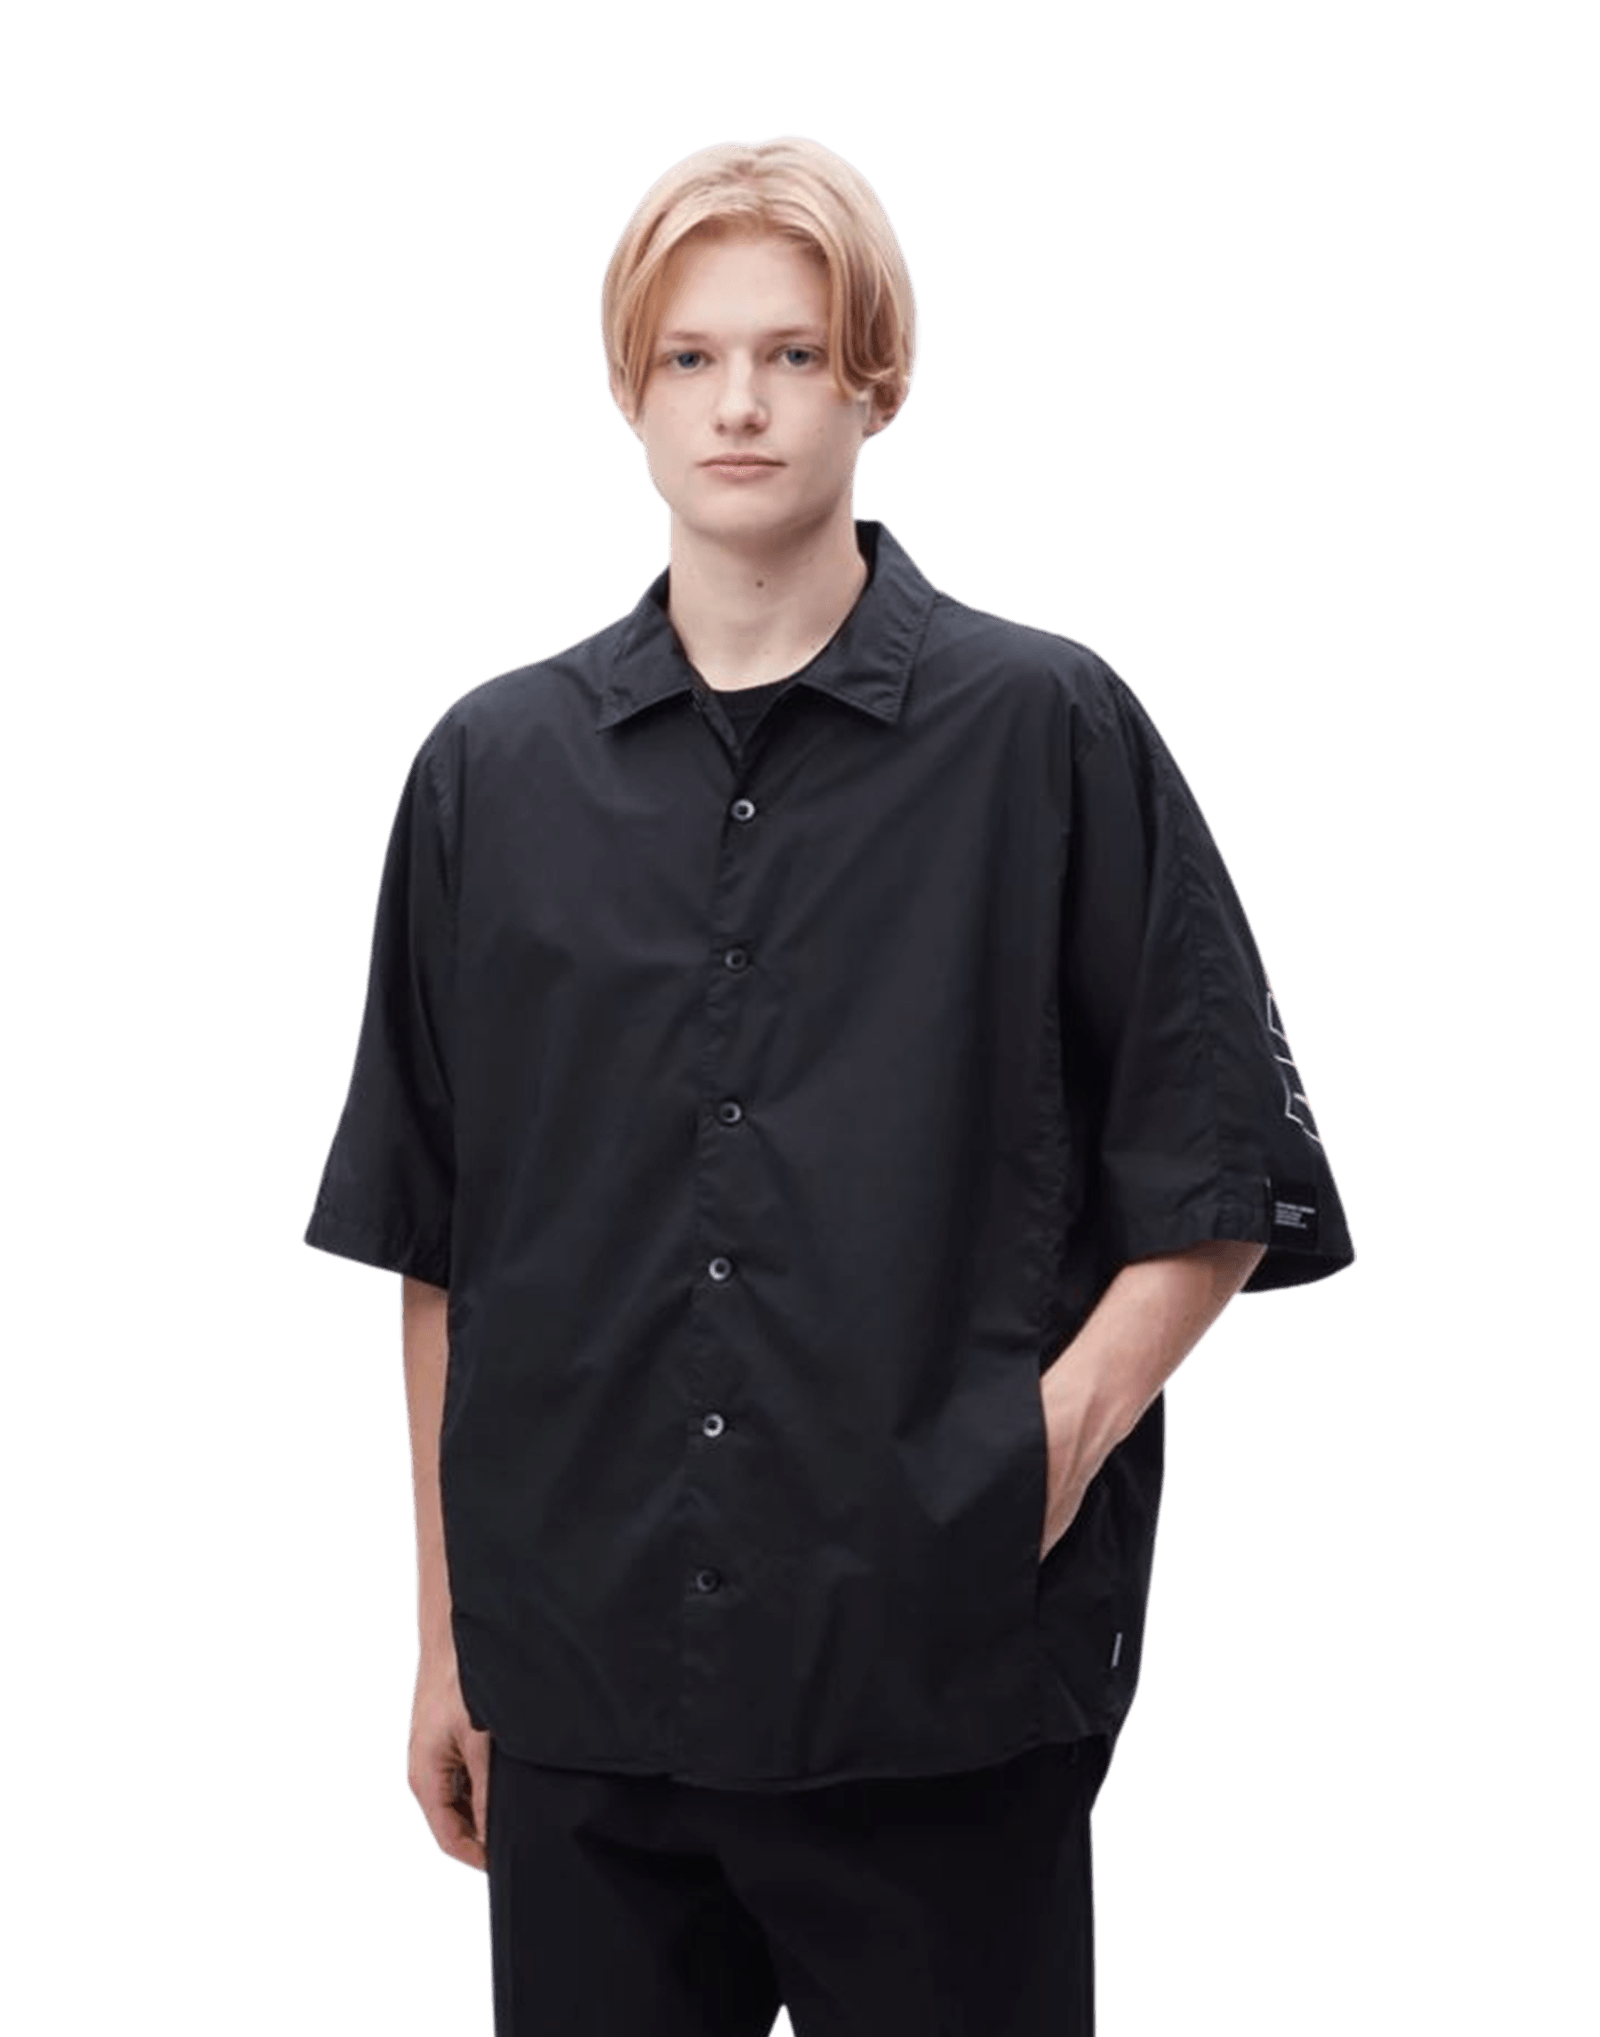 Dolmansleeve Shirt $209 Neighborhood Tops Shirts Black